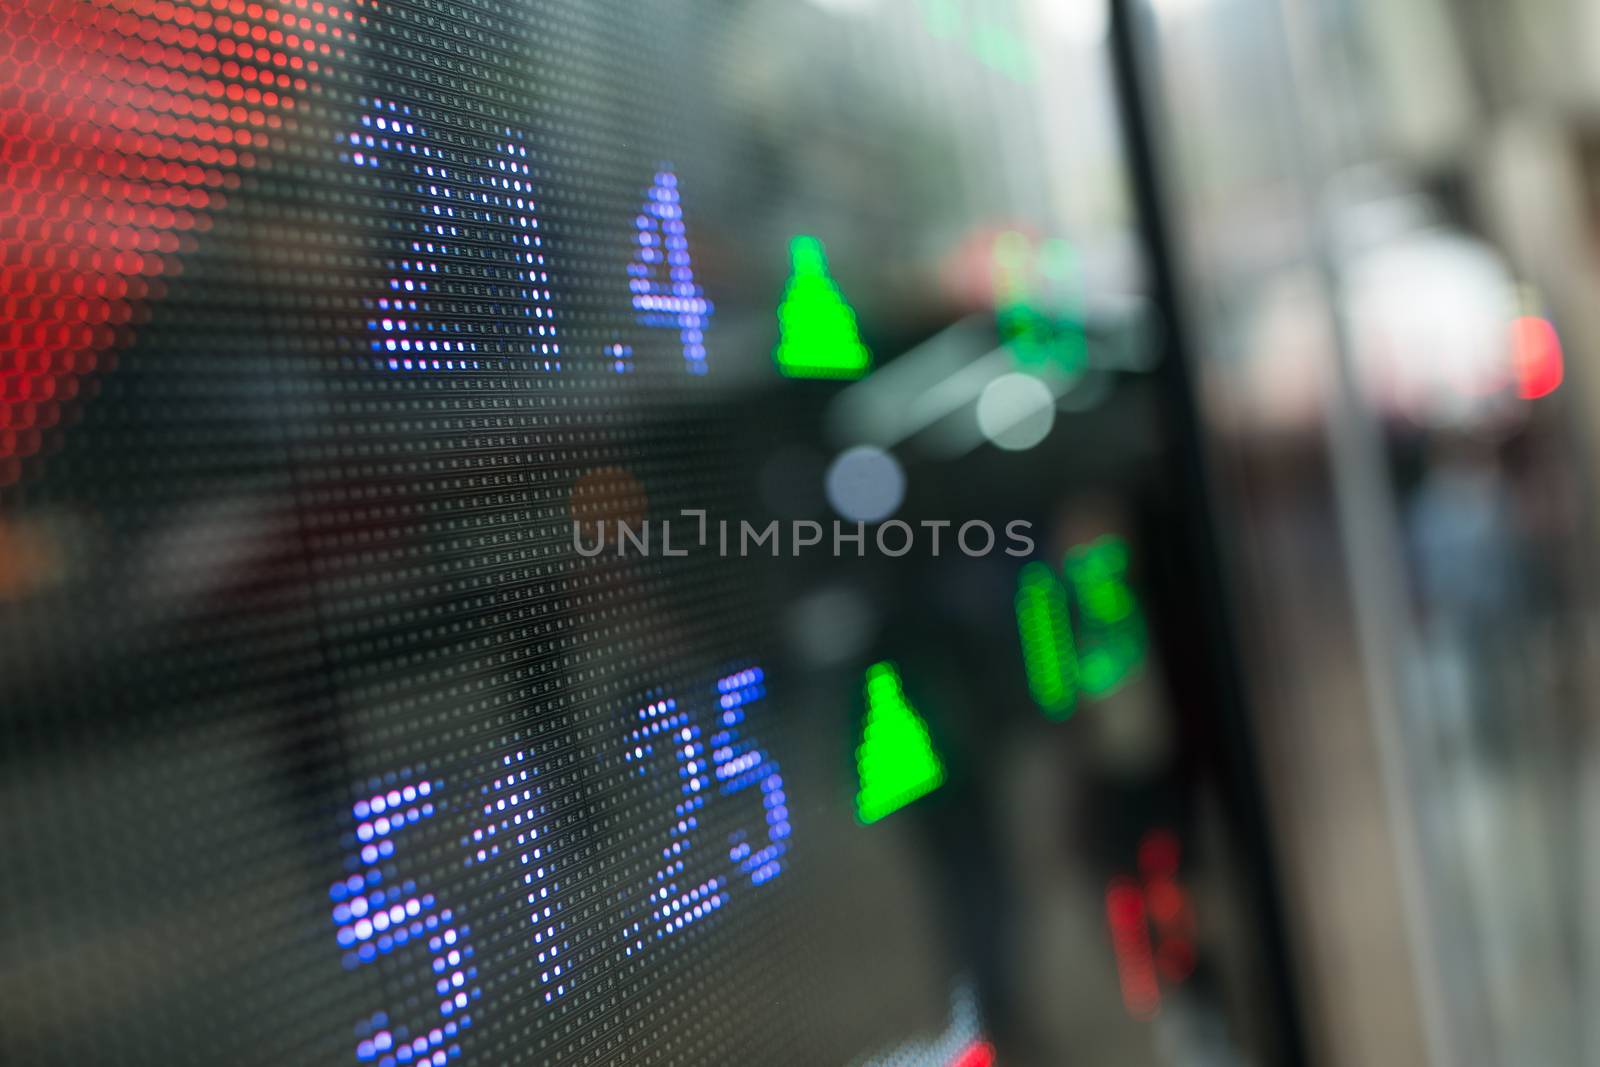 Stock market display